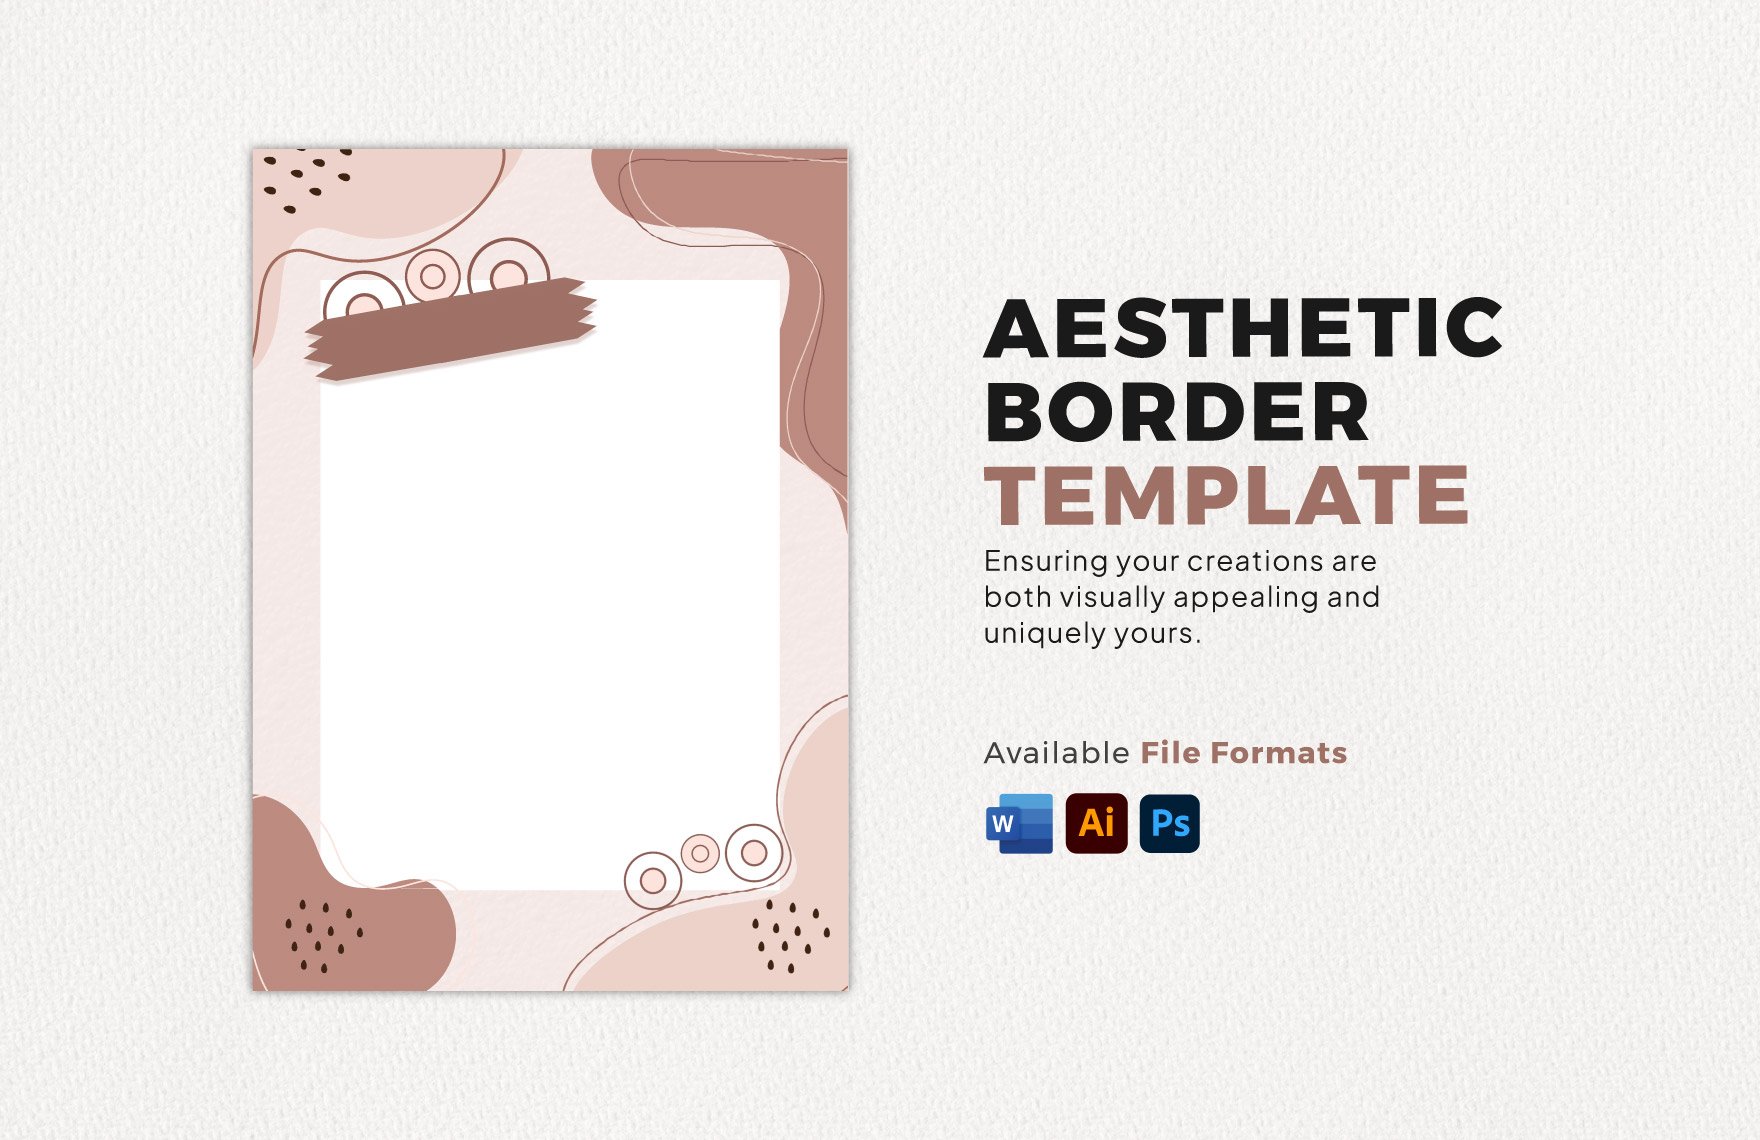 Aesthetic Border Template in Word, Illustrator, PSD